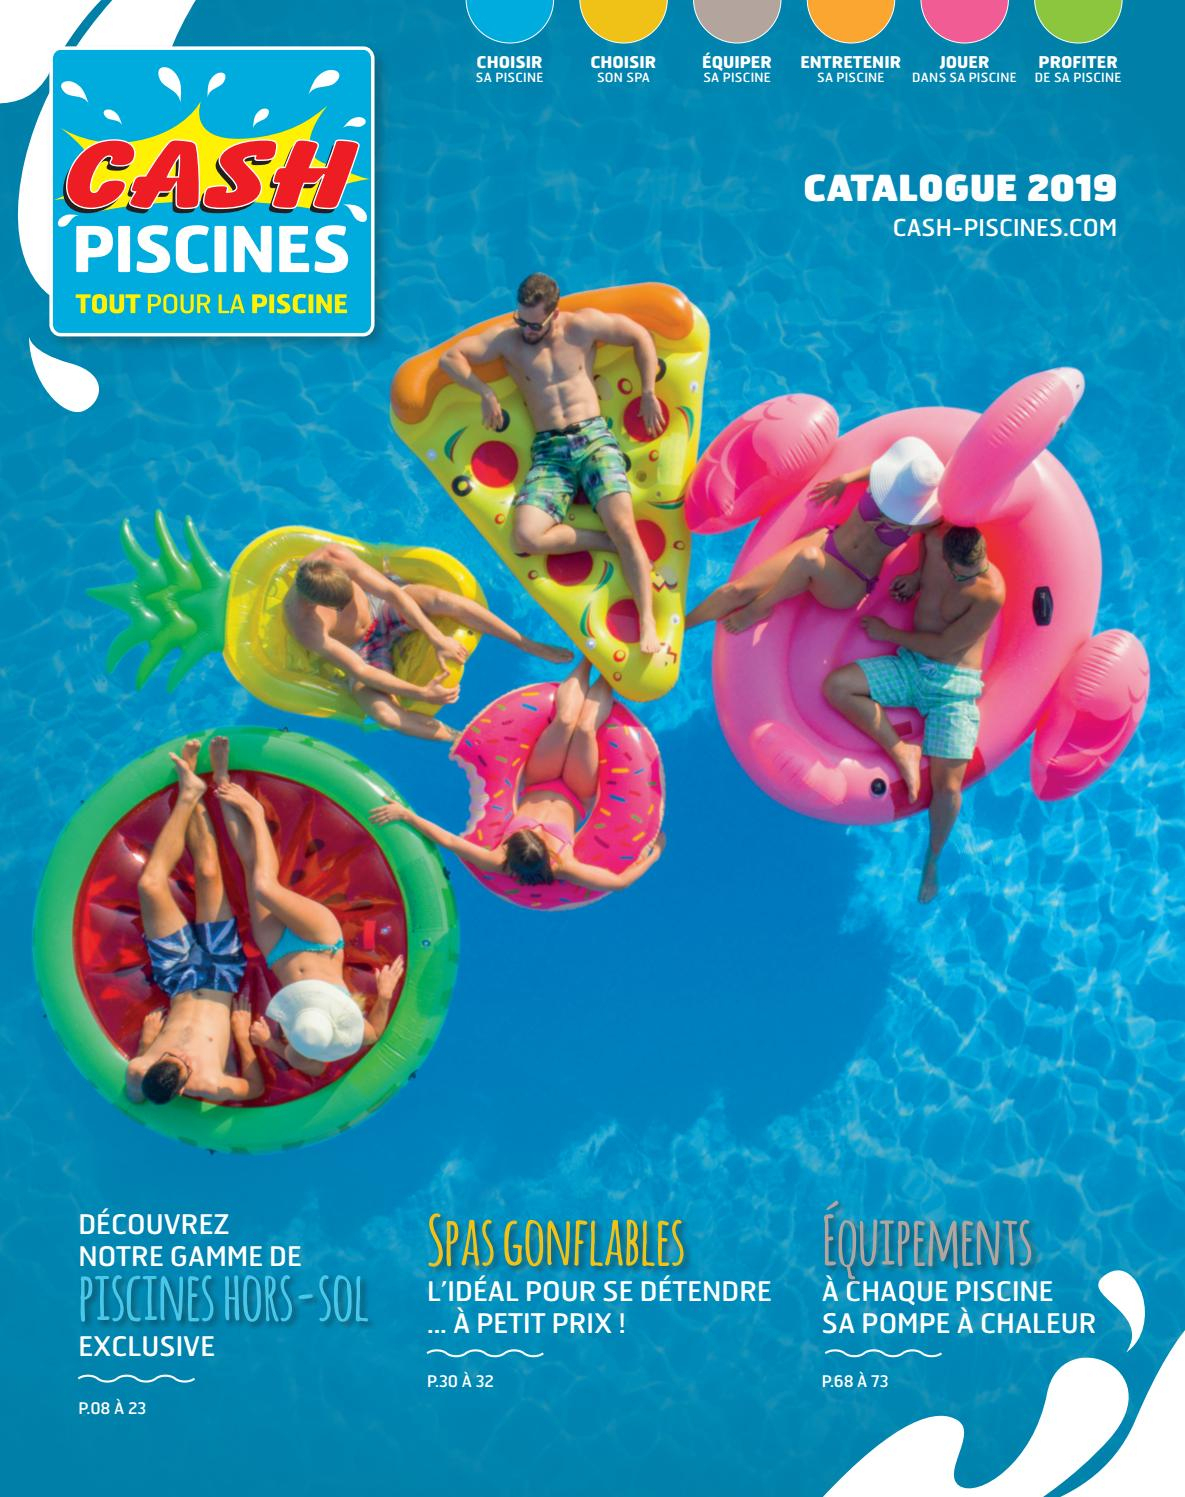 Catalogue Cash Piscines 2019 By Cashpiscines2 - Issuu dedans Cash Piscine Nimes